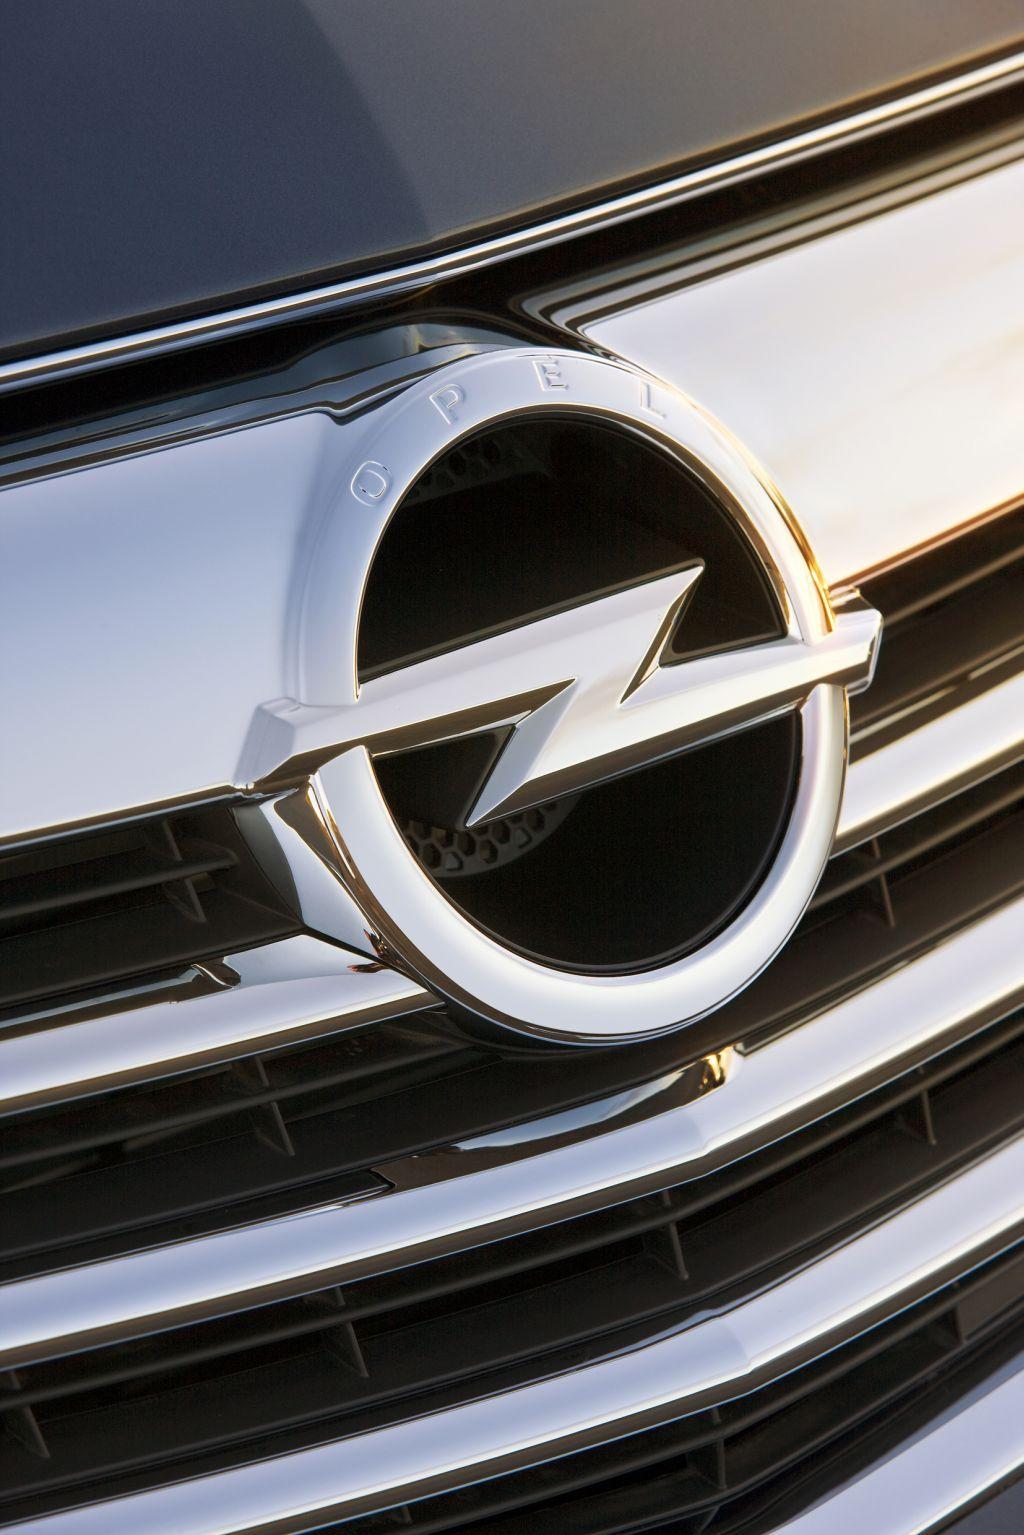 Lighting Bolt Car Logo - Refined Opel logo expresses brand's new confidence